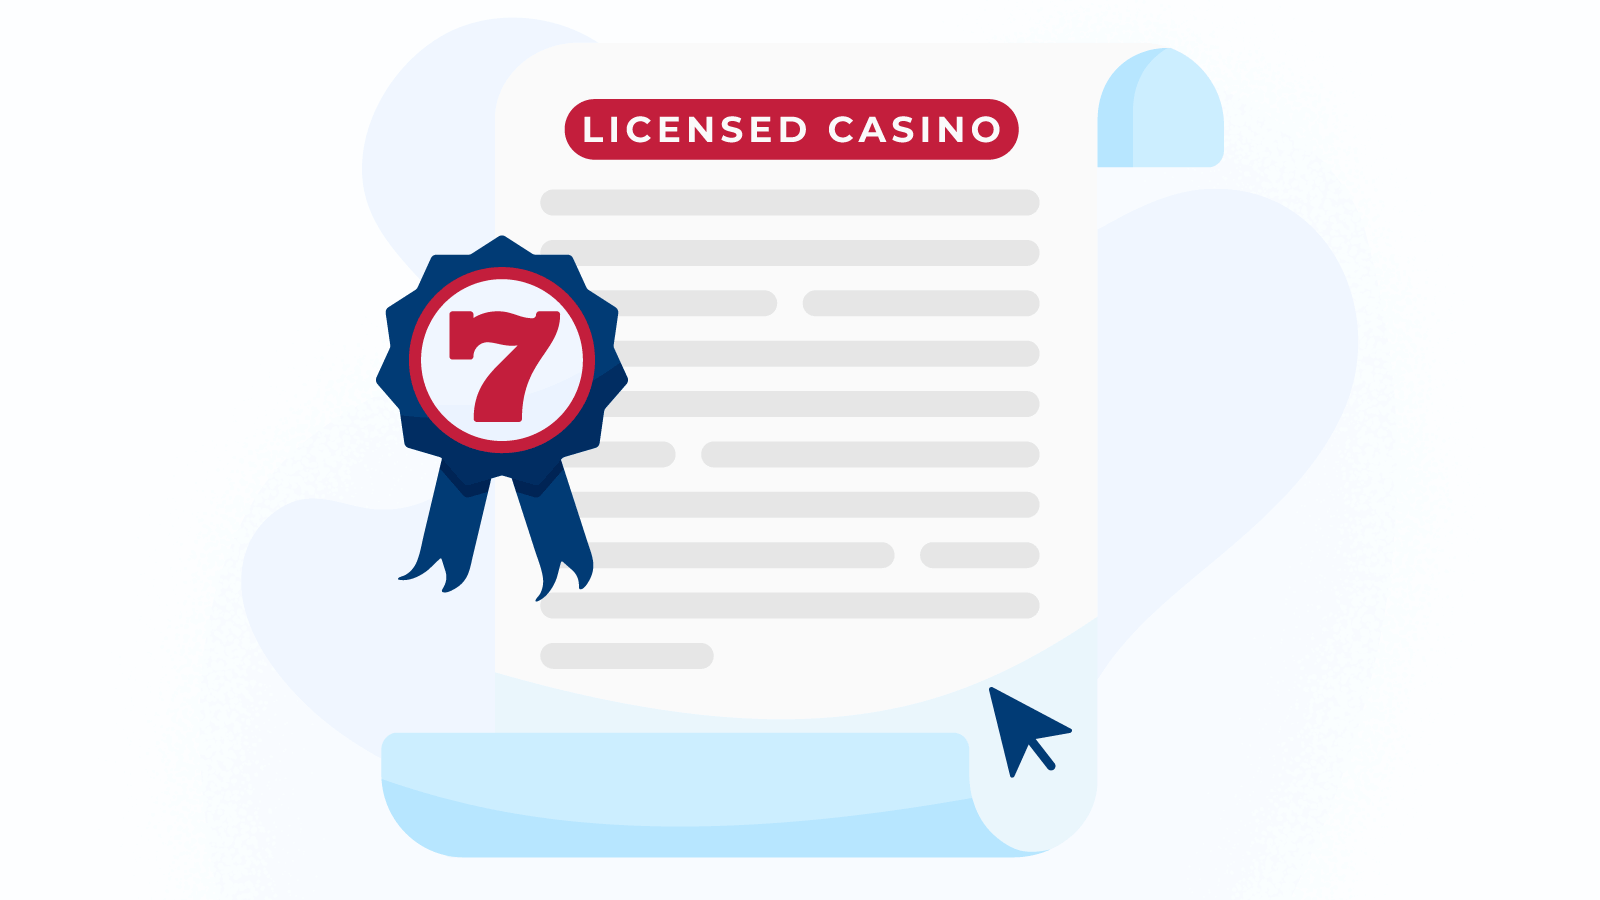 Benefits of Licensed New Casinos in Ontario